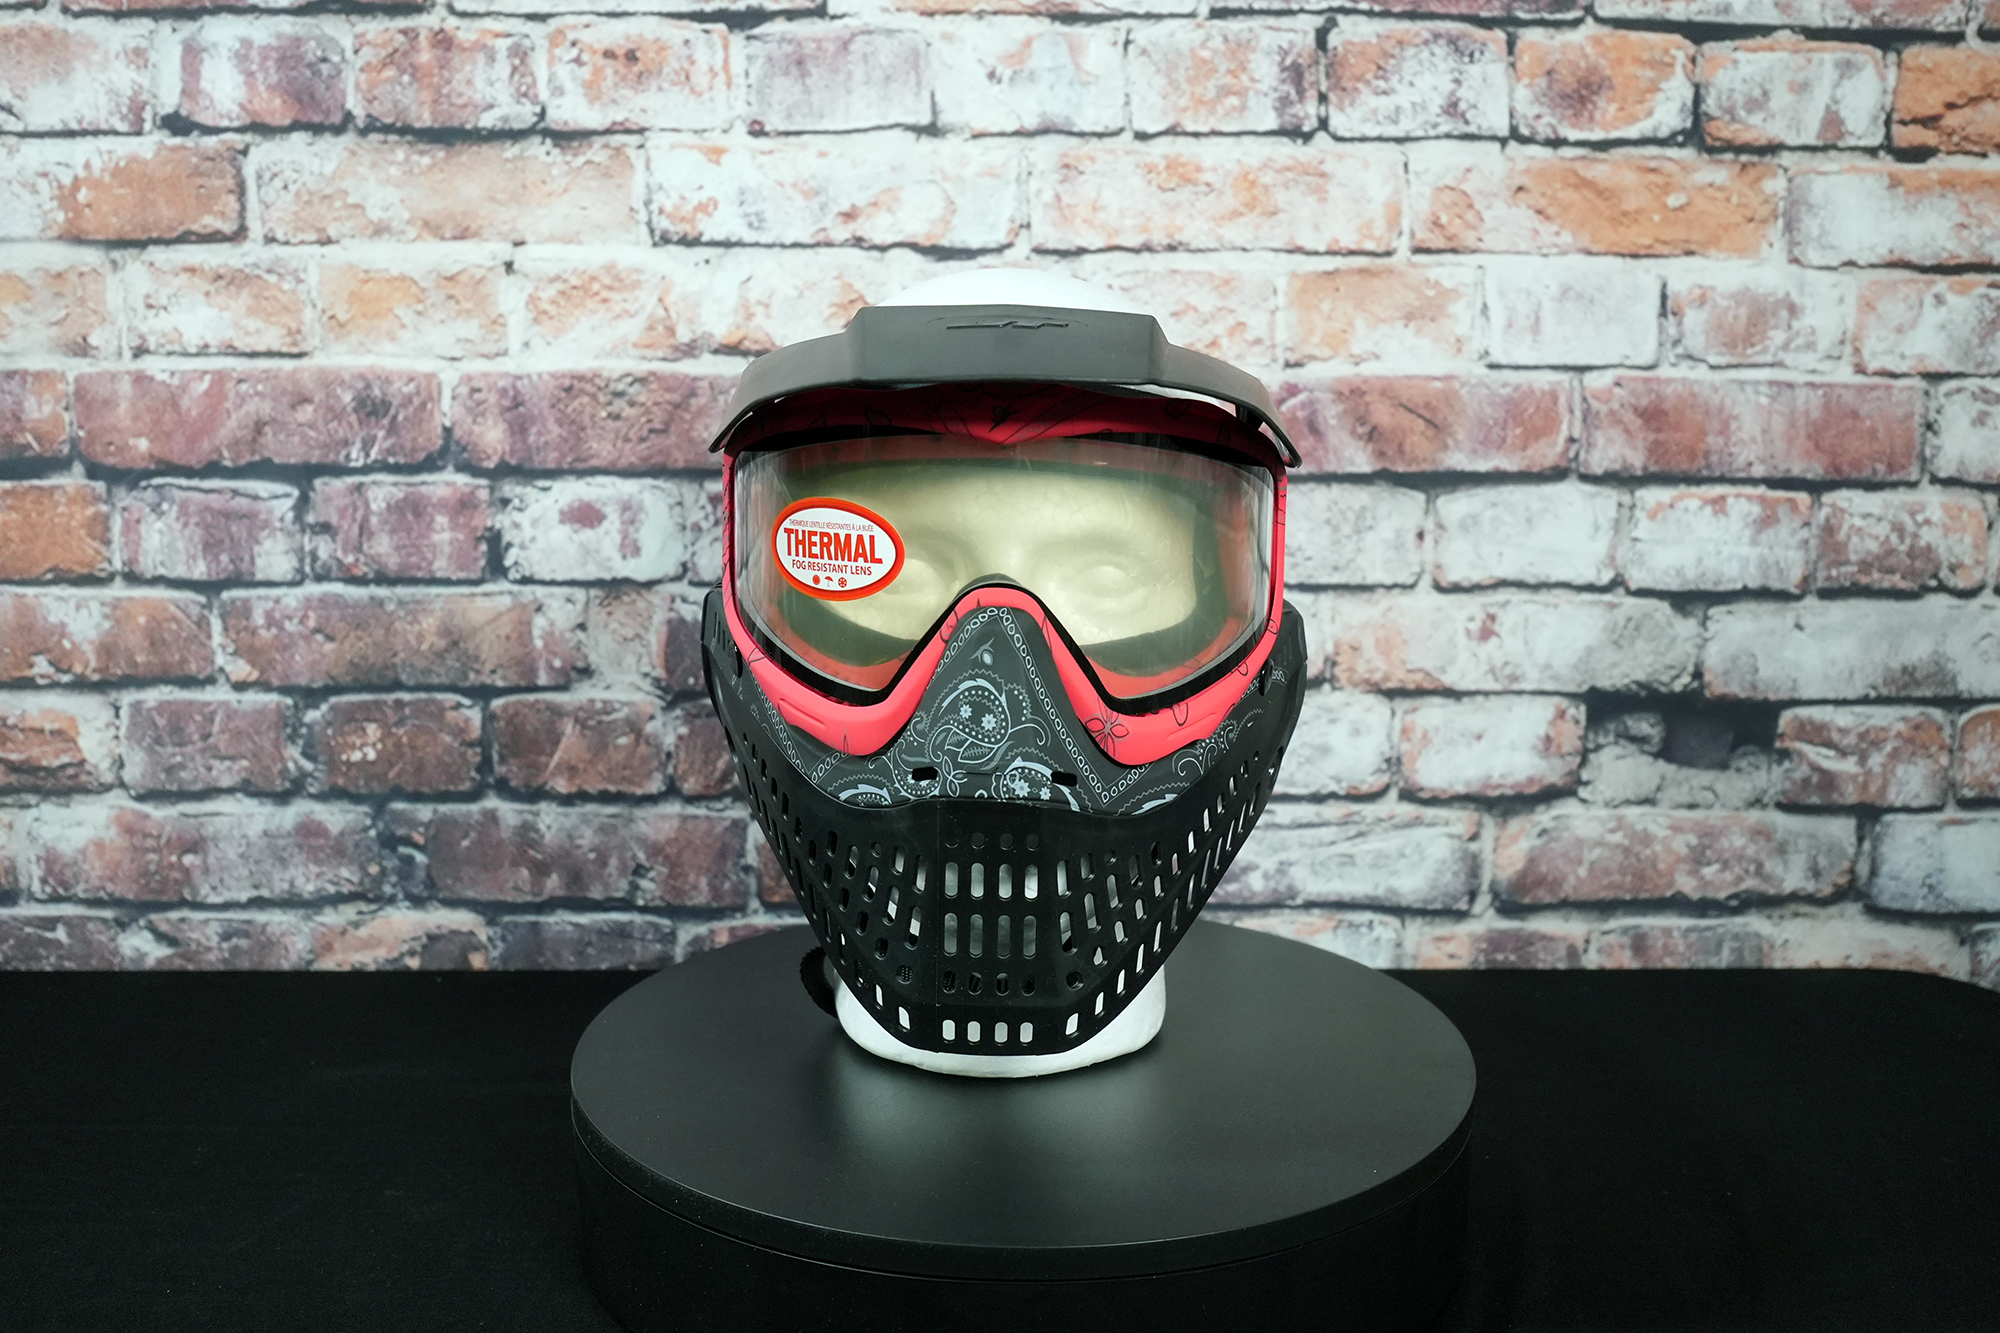 NEW Jt ProFlex Thermal Paintball Mask - Black/Black w/ Smoke Lens